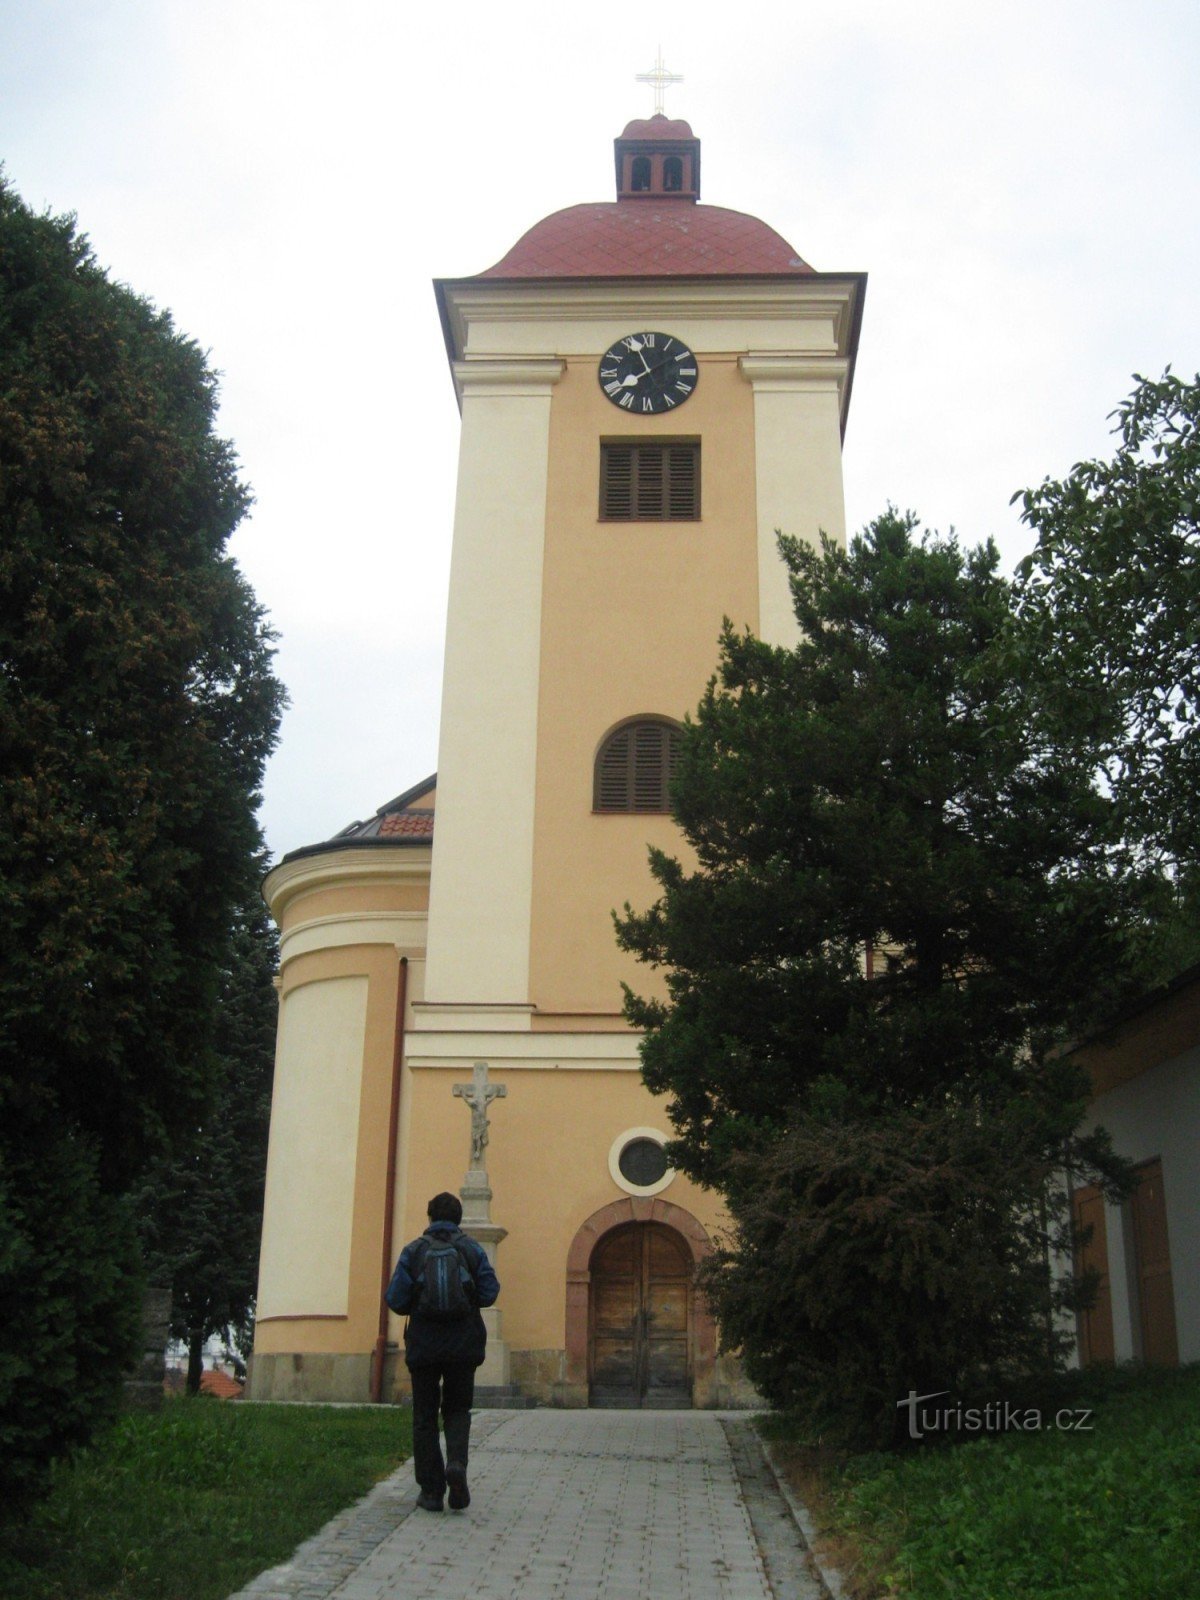 The church of st. Nicholas